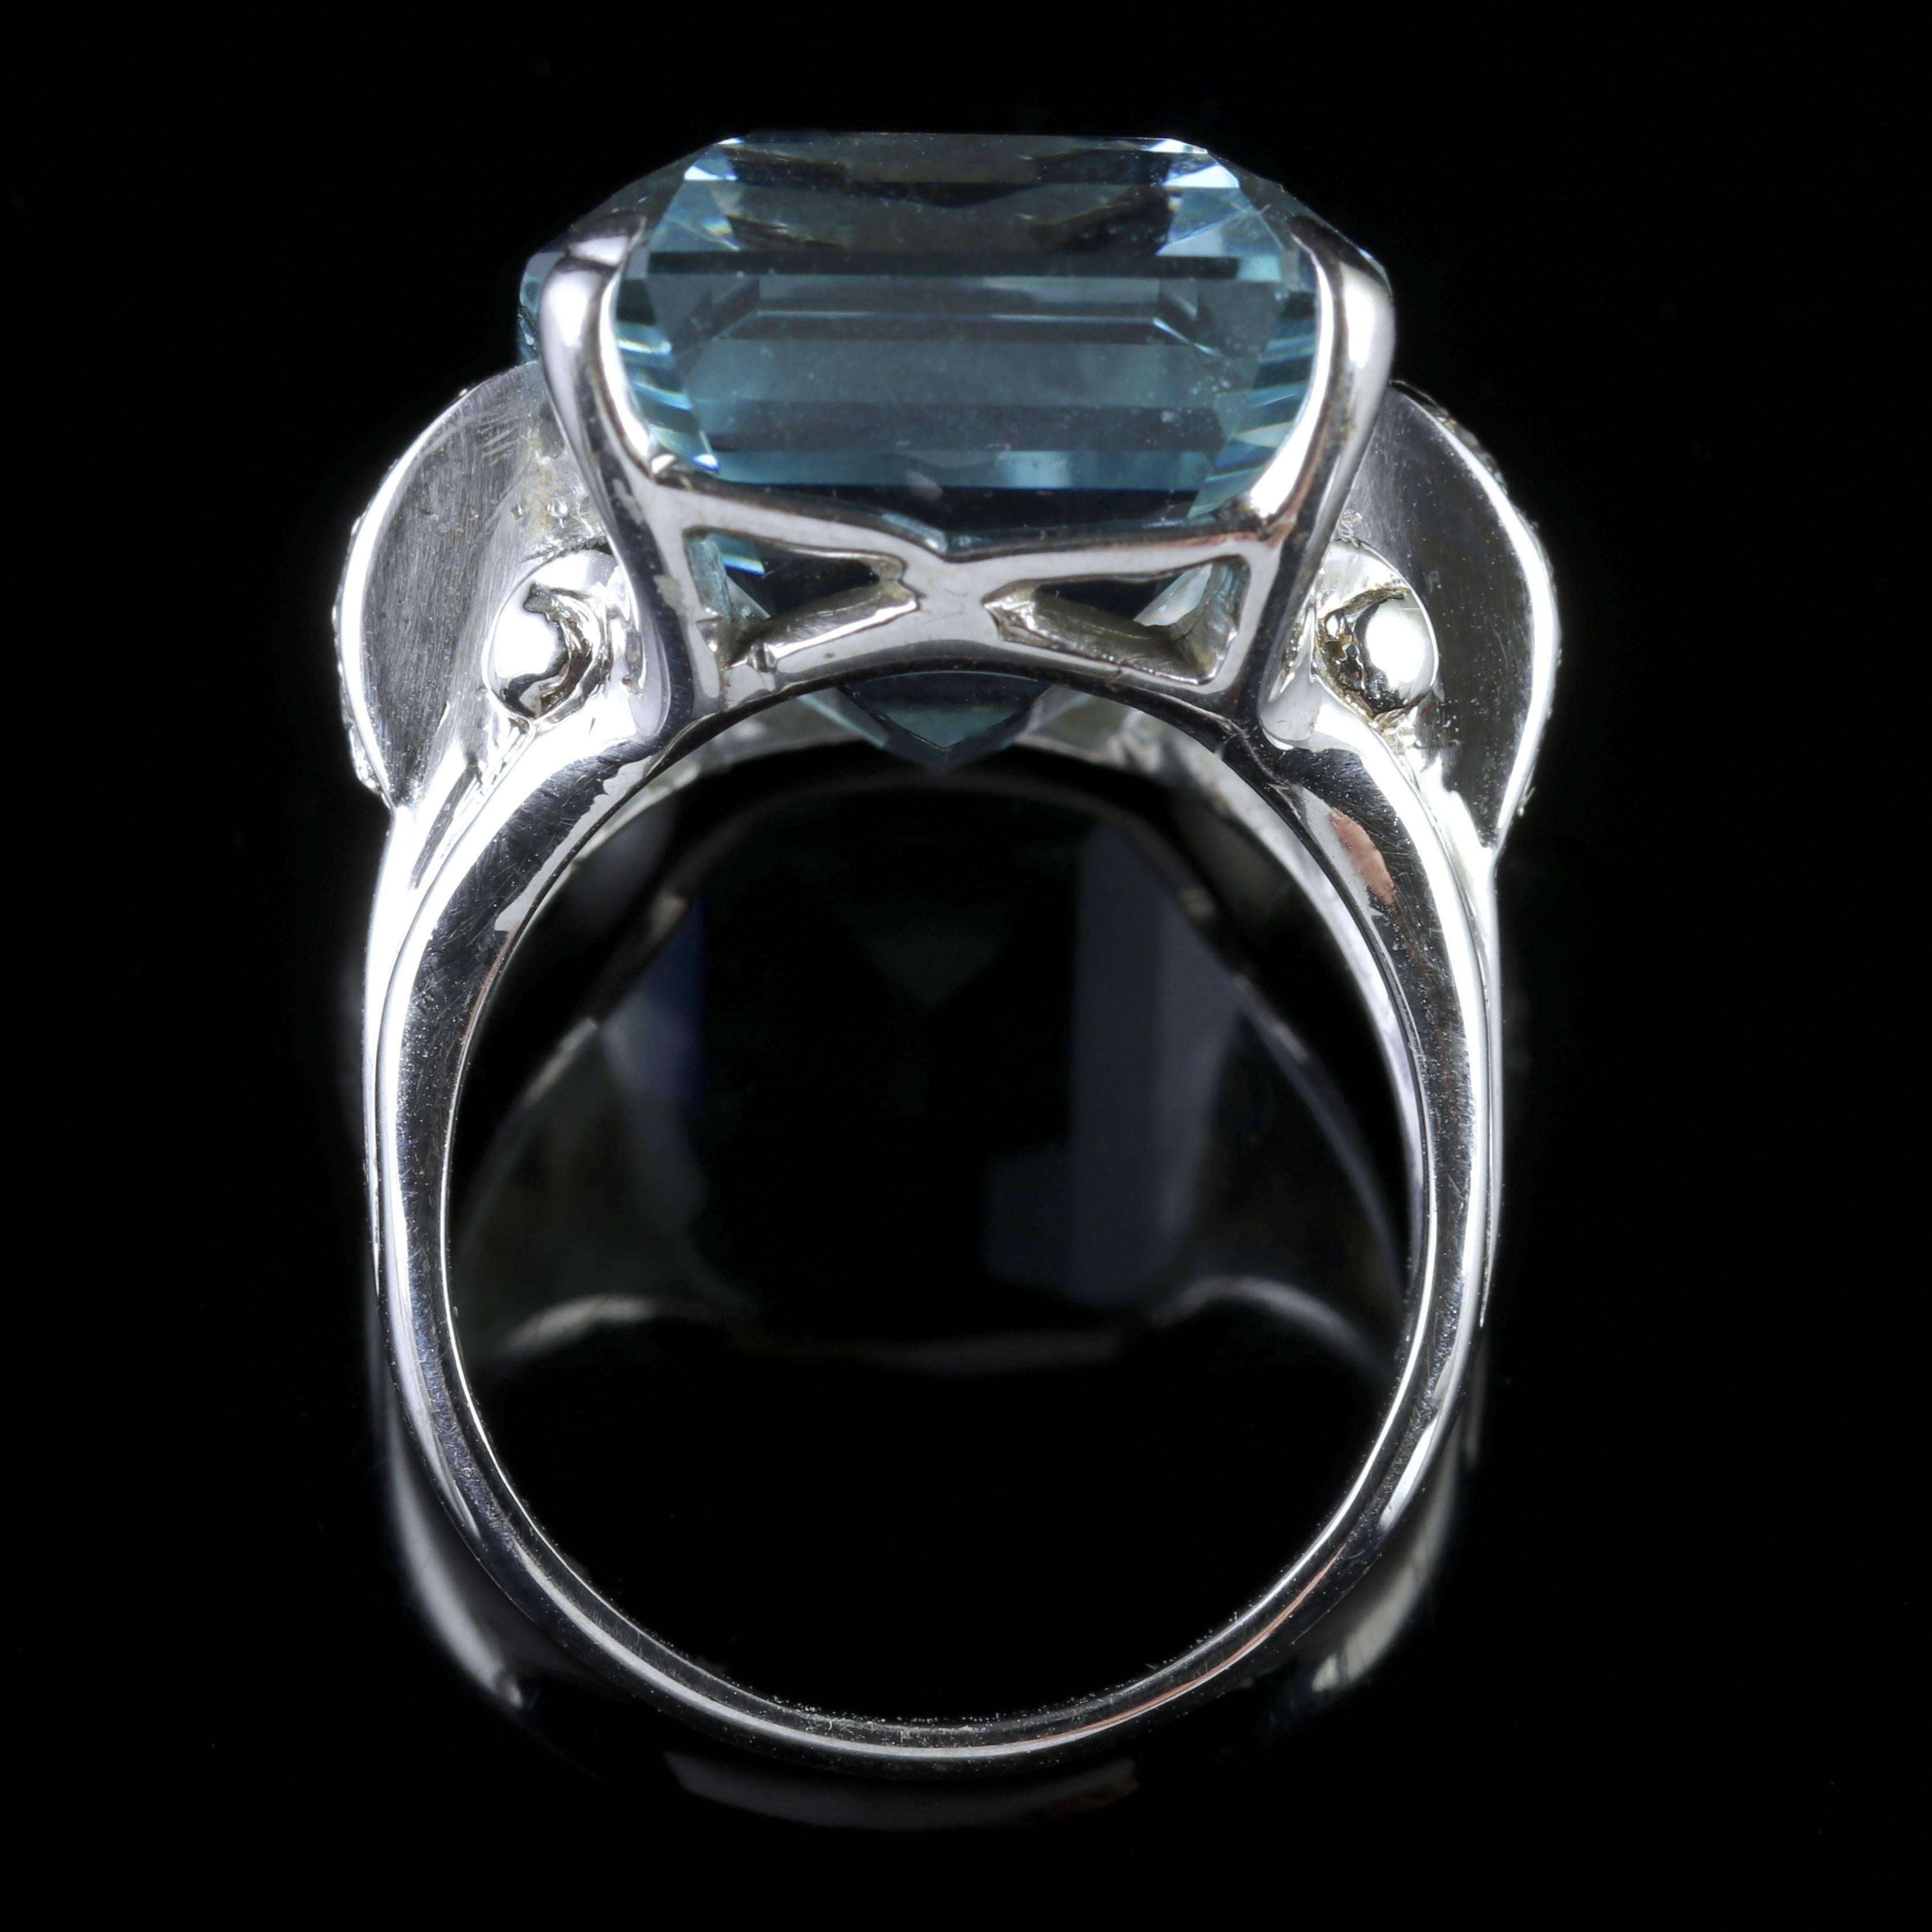 Women's Art Deco Large 28 Carat Aquamarine Diamond Ring